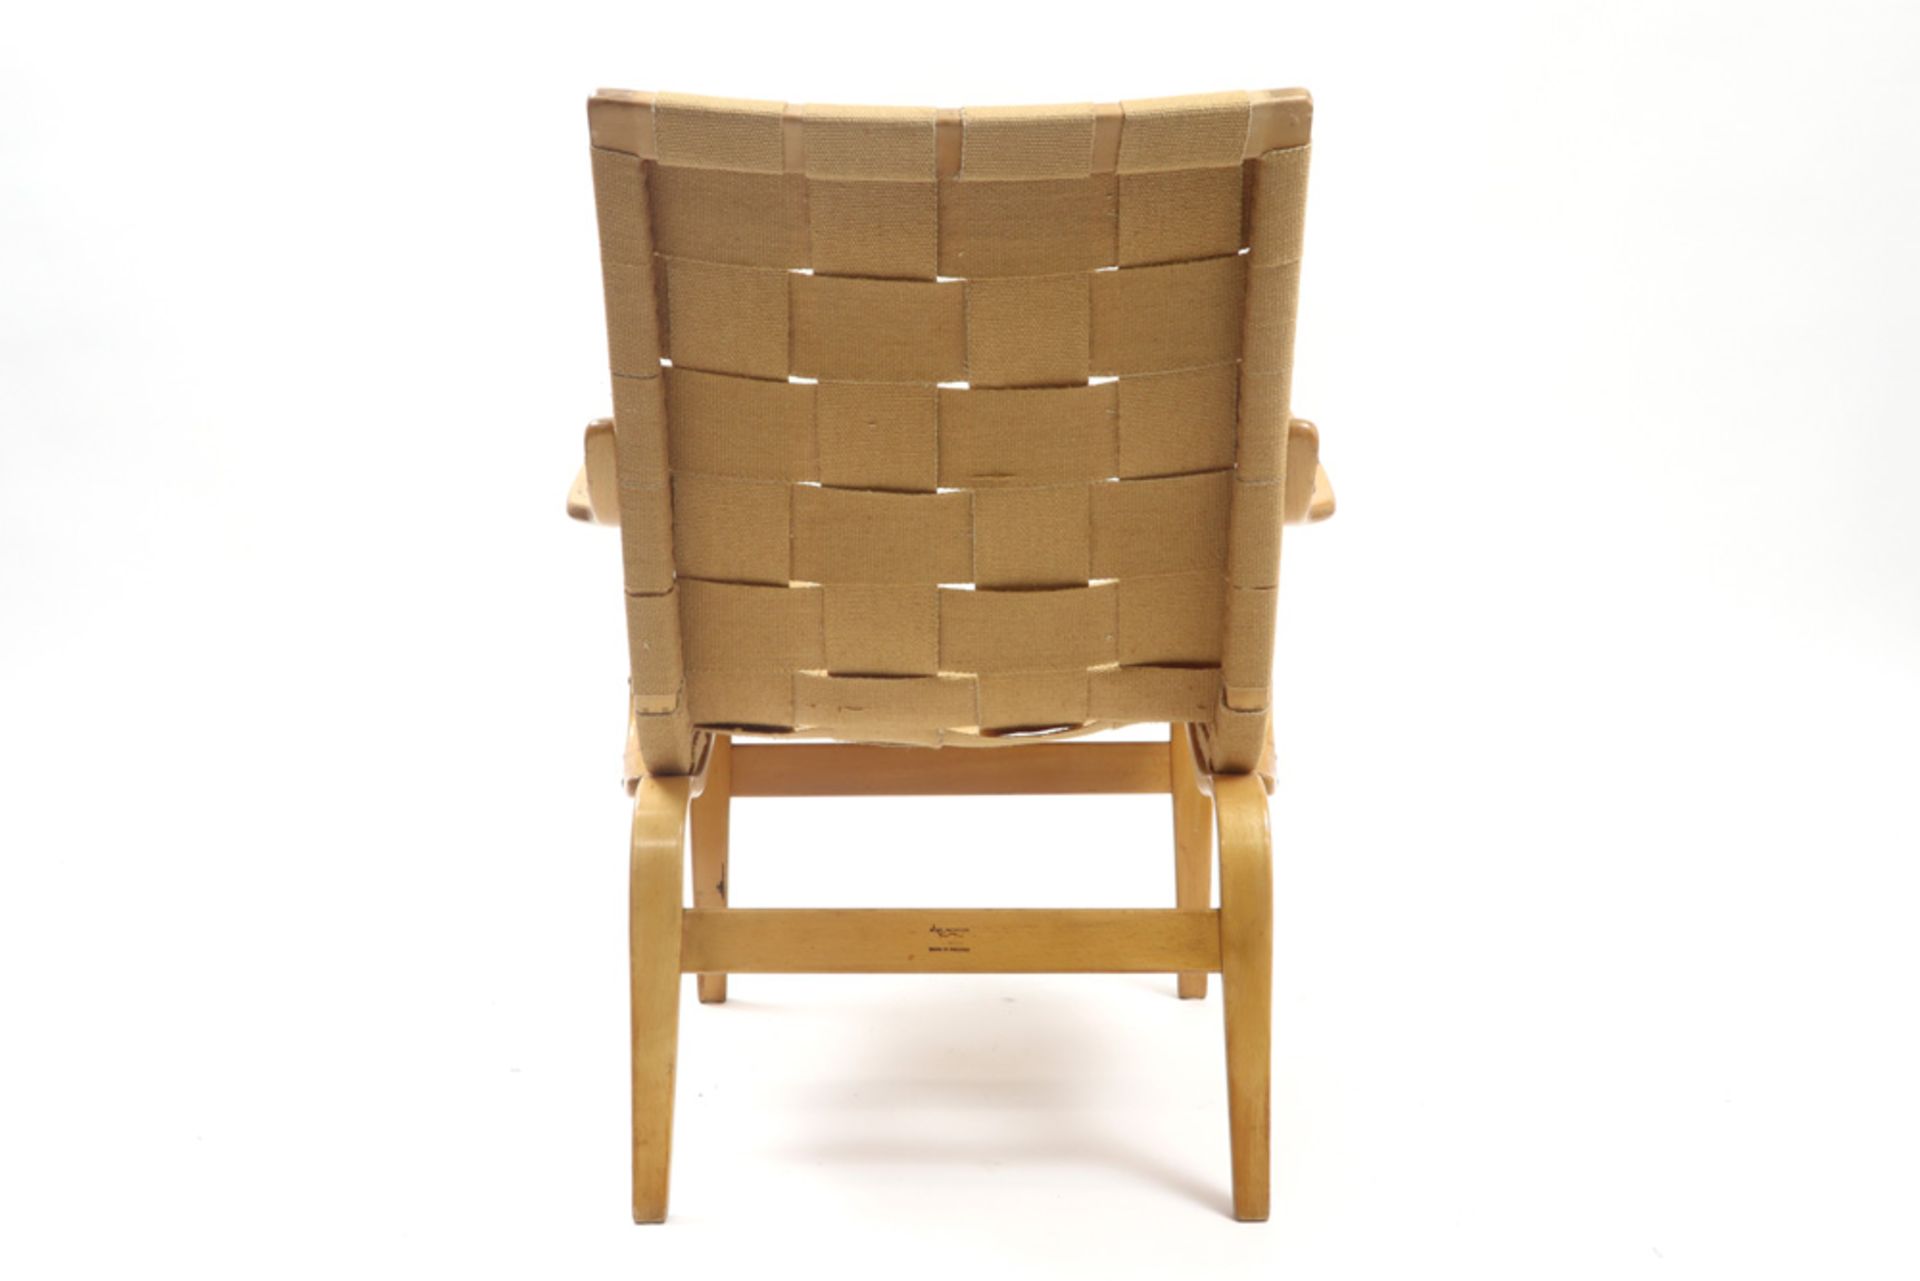 Bruno Mathsson marked "Eva" (design of 1934) armchair in bent plywood and solid birch frame with - Bild 3 aus 4